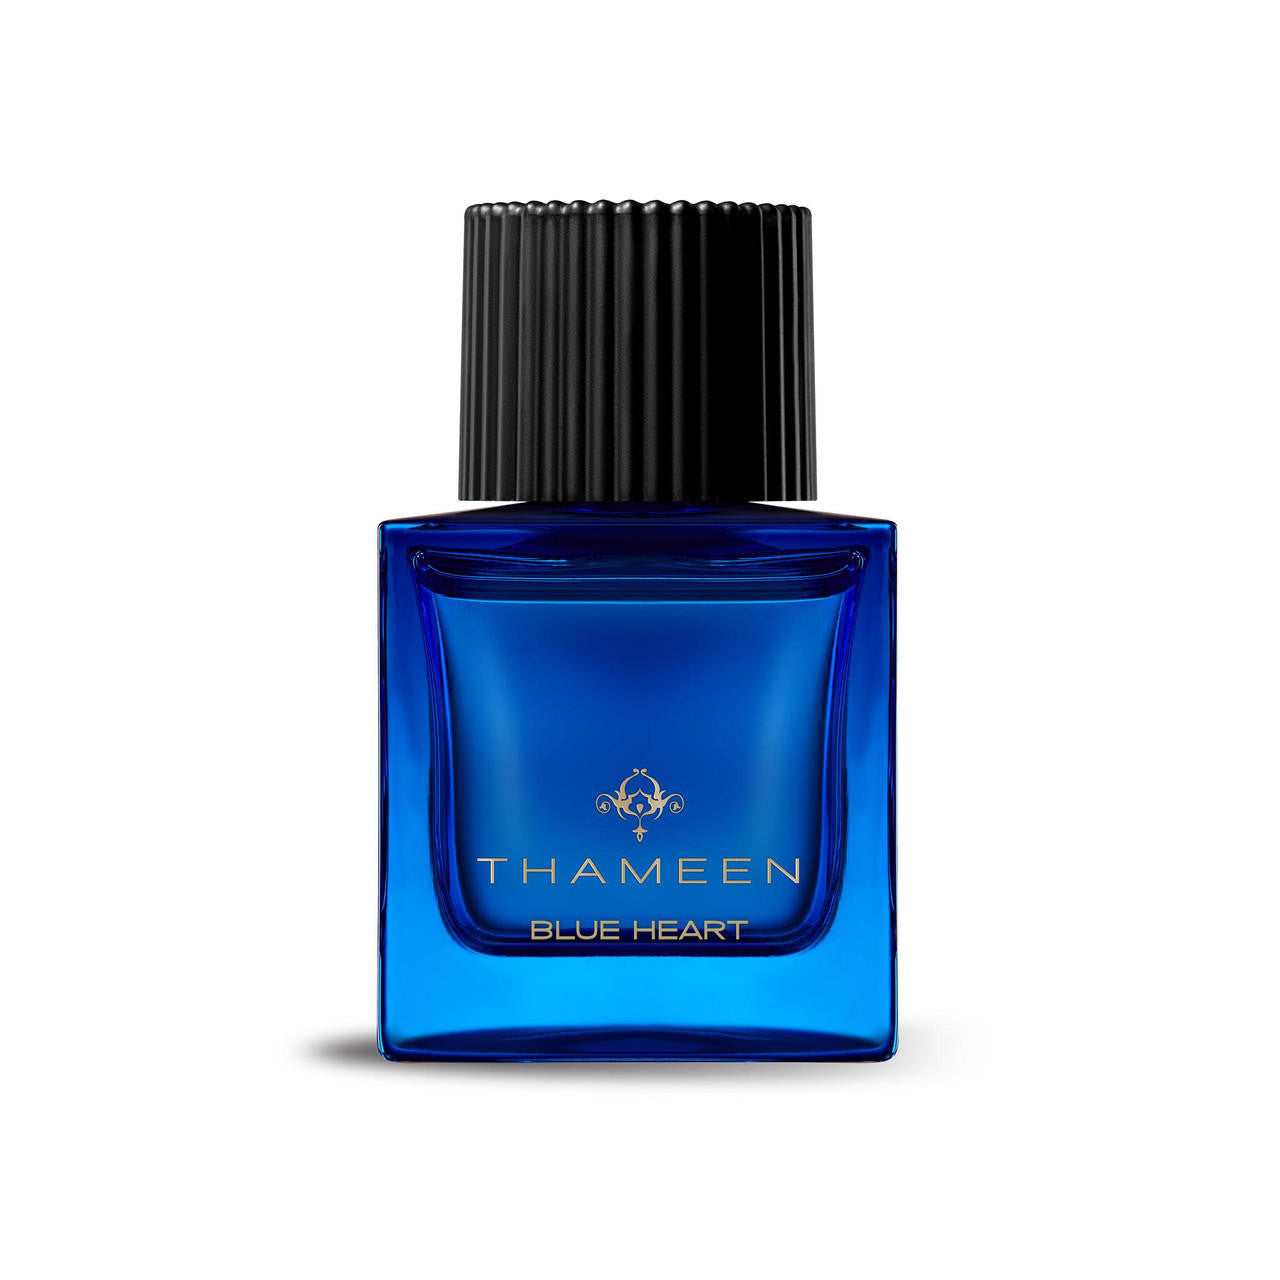  Thameen BLUE HEART Extrait de Parfum 